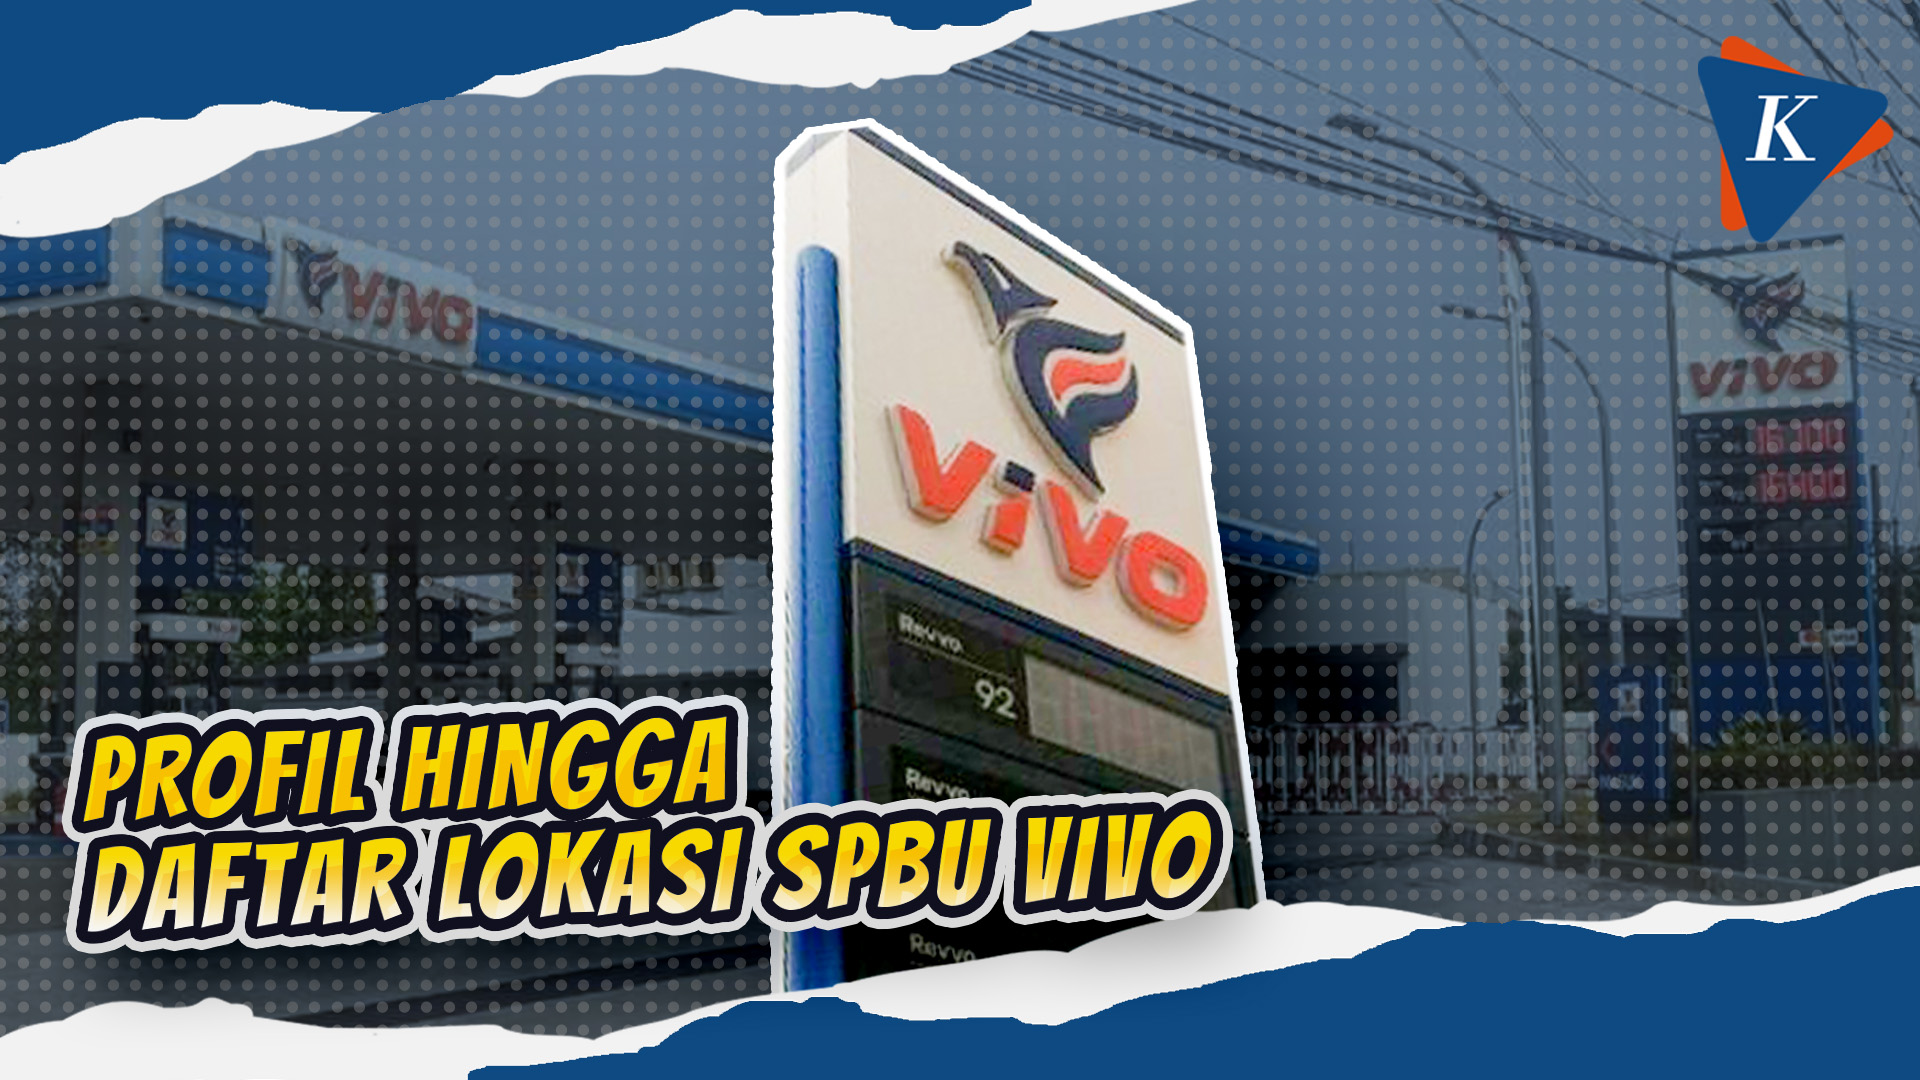 Mengenal Vivo, SPBU yang Sempat Jual BBM Rp 8.900